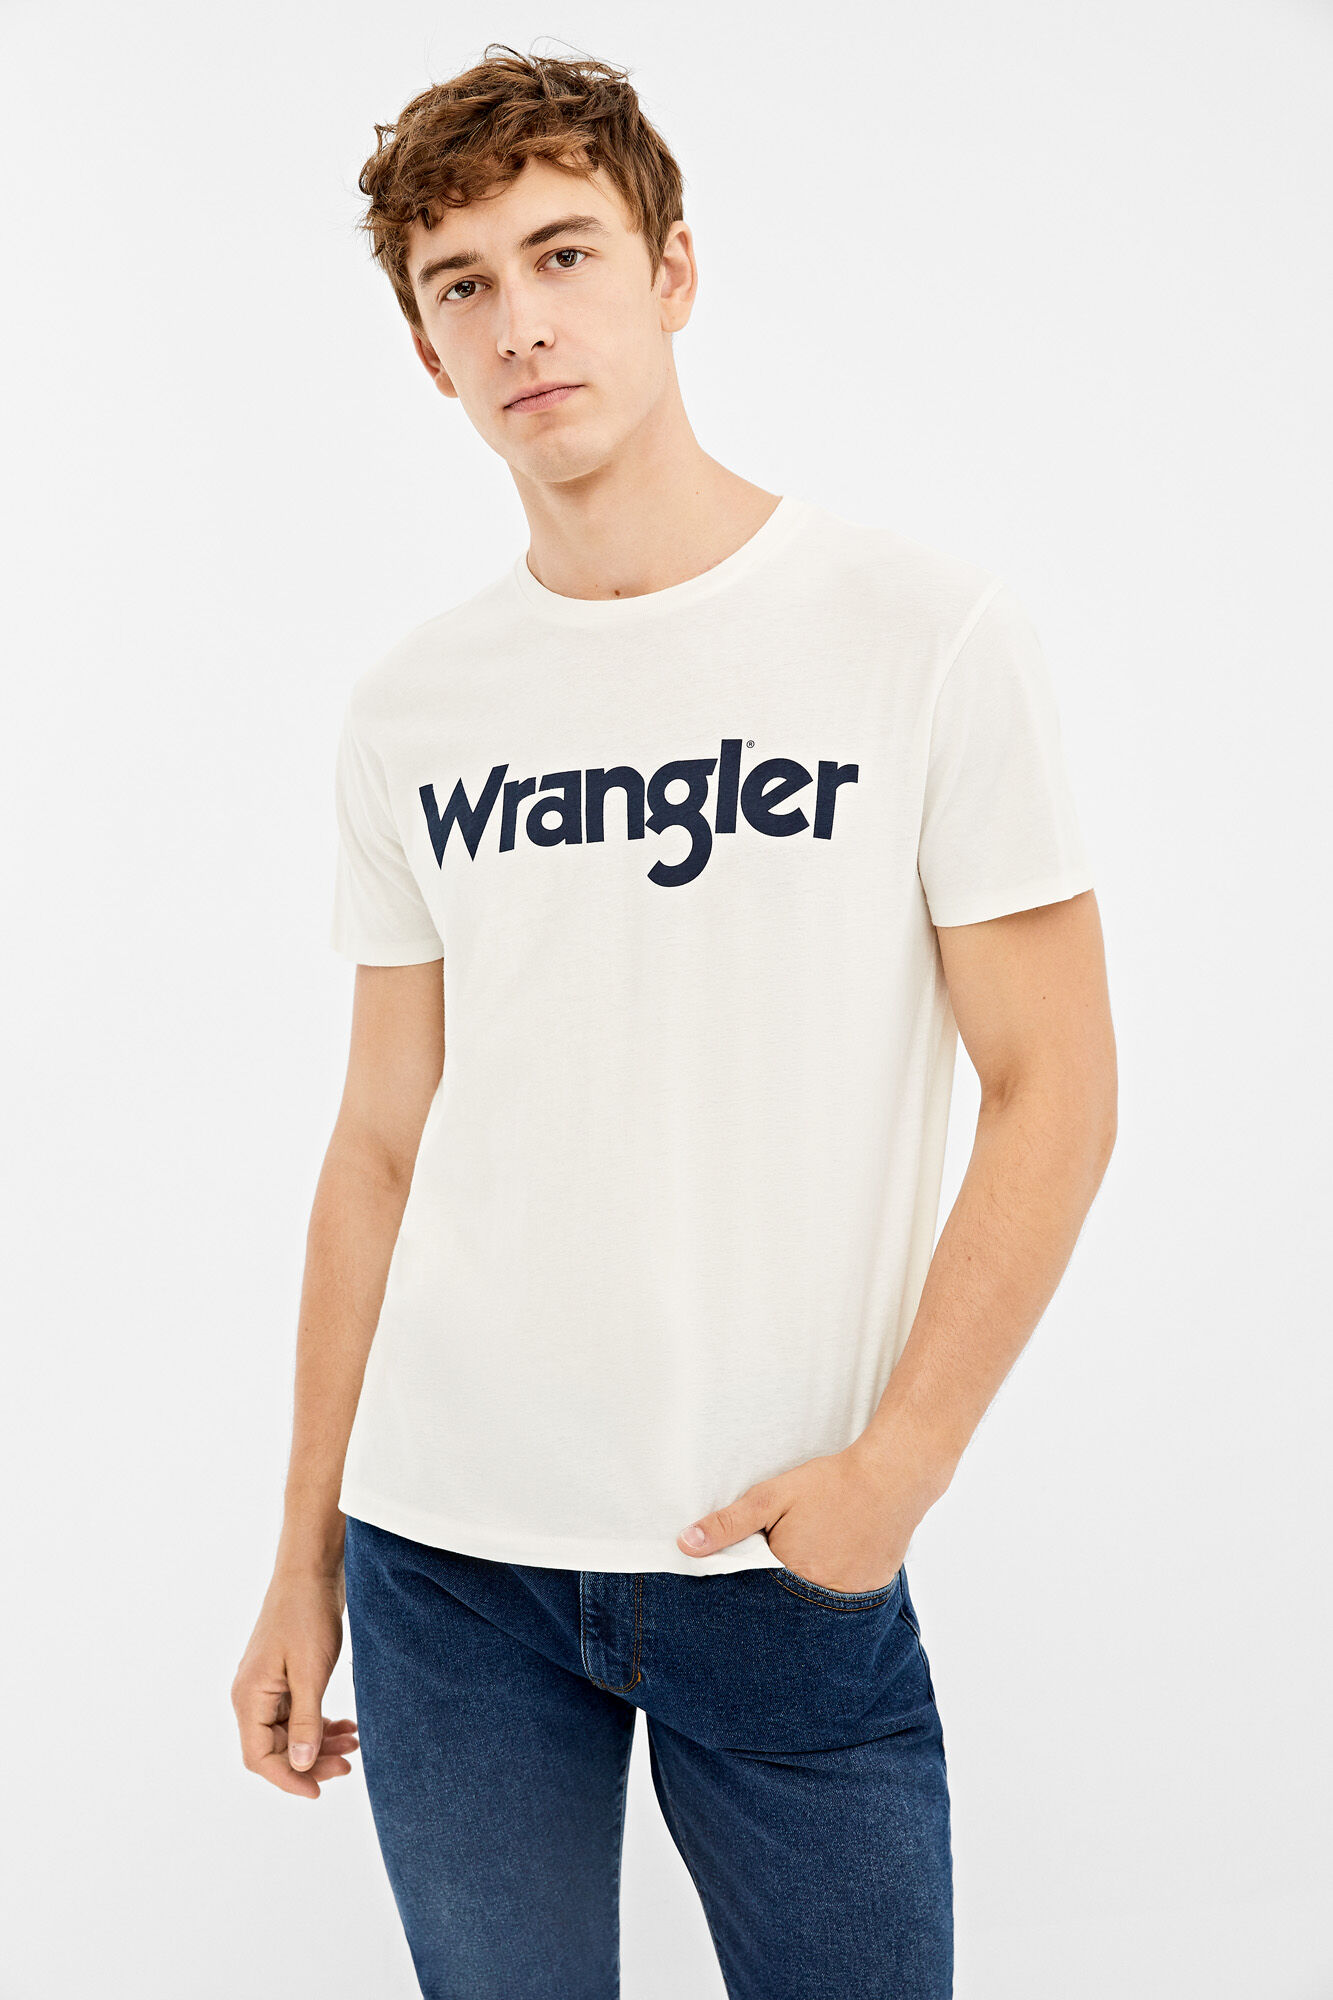 Wrangler Womens Shirt Size Chart